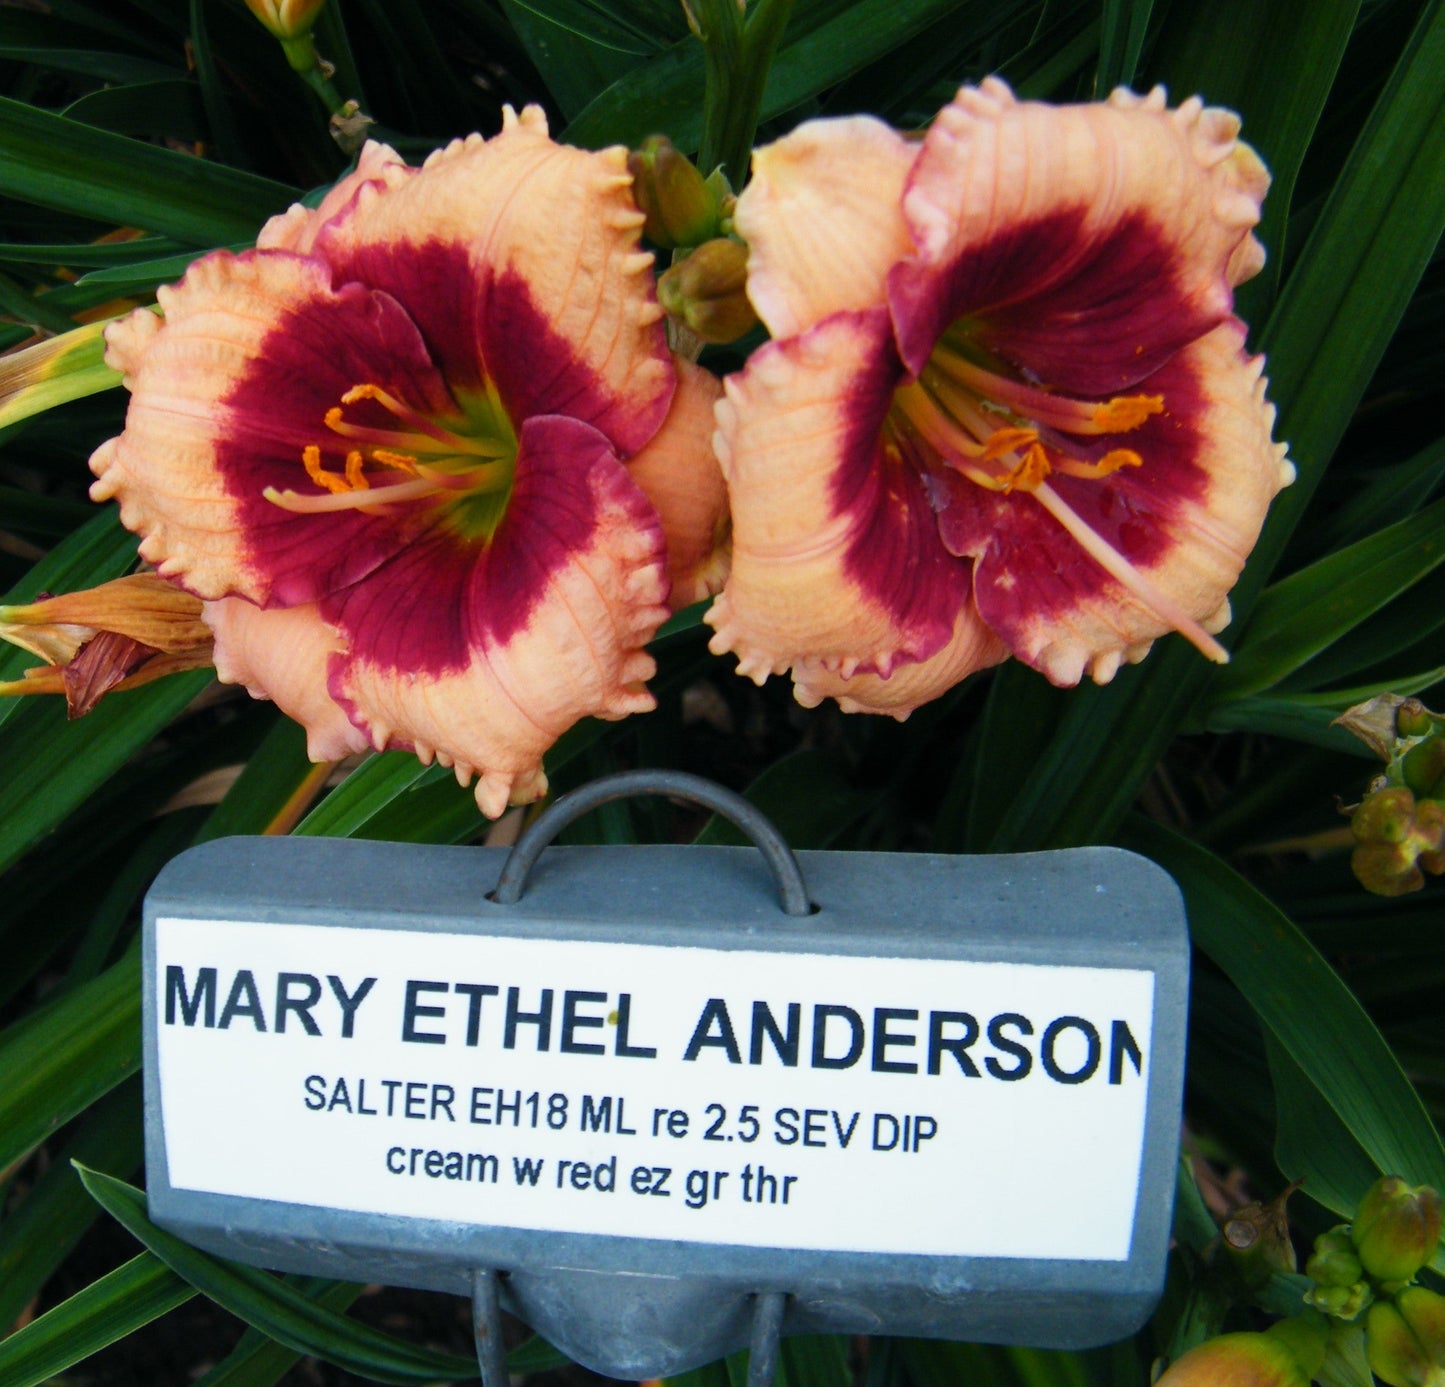 MARY ETHEL ANDERSON